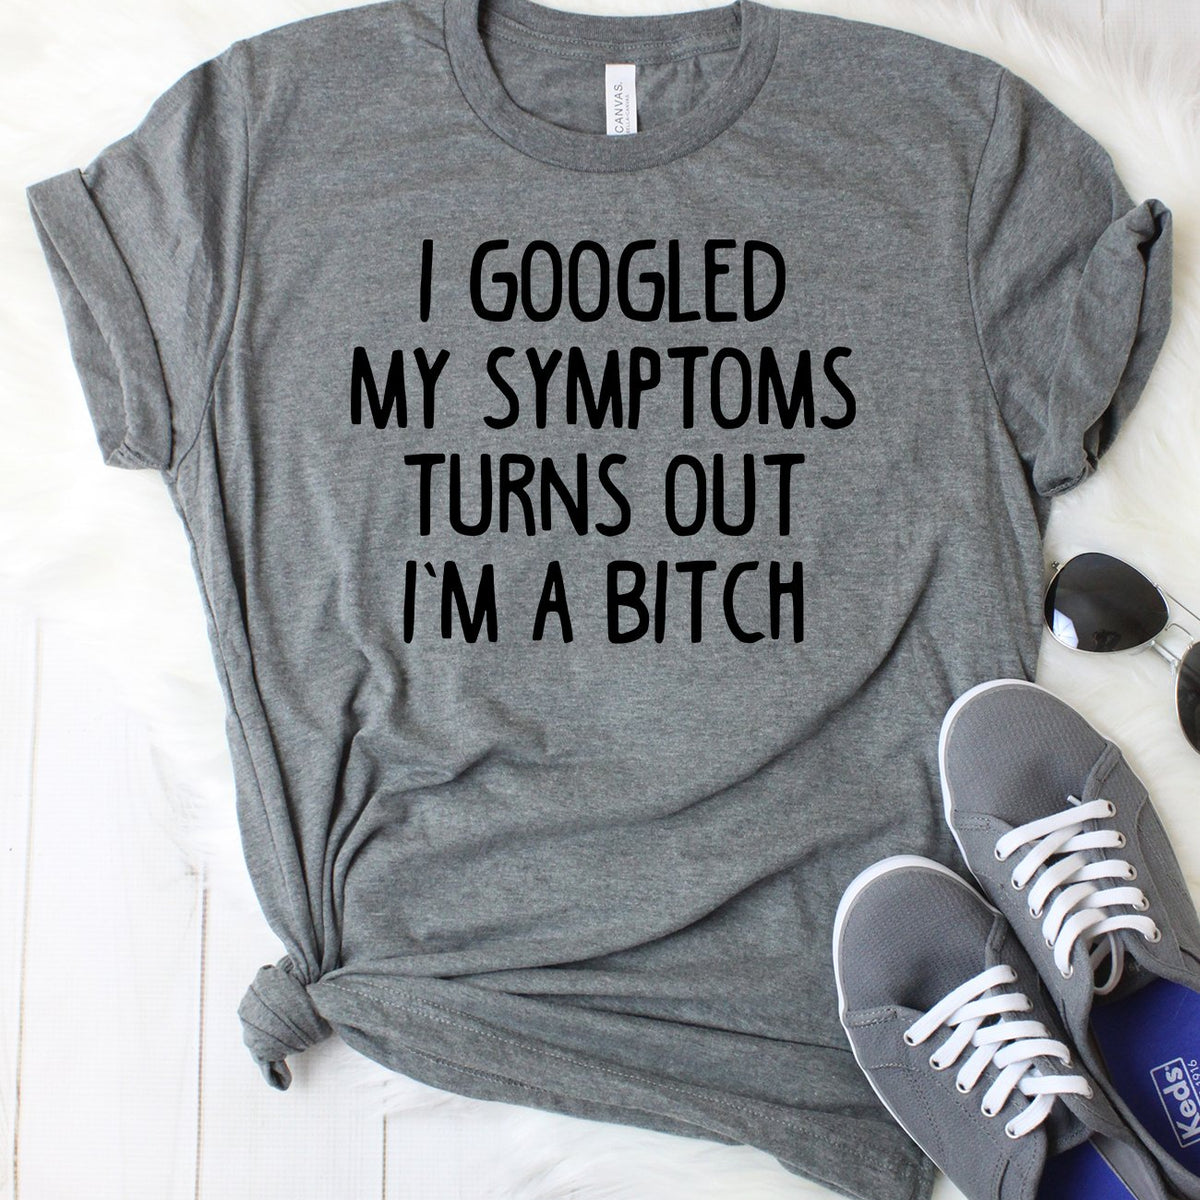 I Googled My Symptoms Turns Out I'm a Bitch T-Shirt